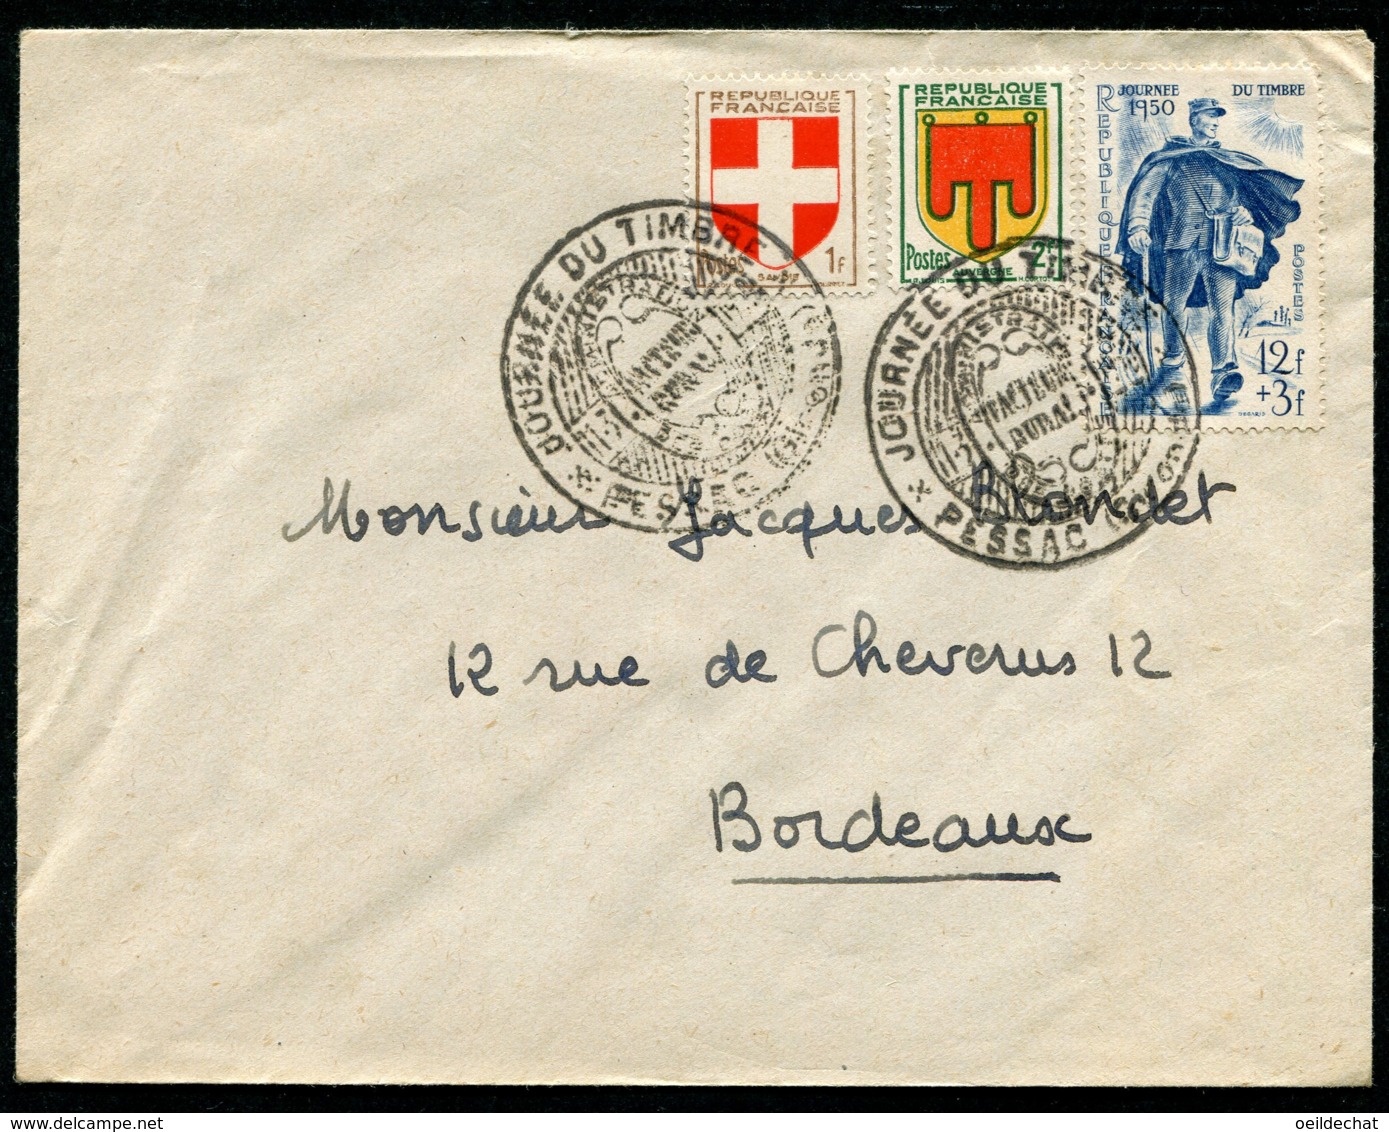 15115 FRANCE N°863 °12F+3F Bleu Journée Du Timbre 1950  Facteur Rural  OSI  Pessac Du 11.3.1950  TB - 1950-1959